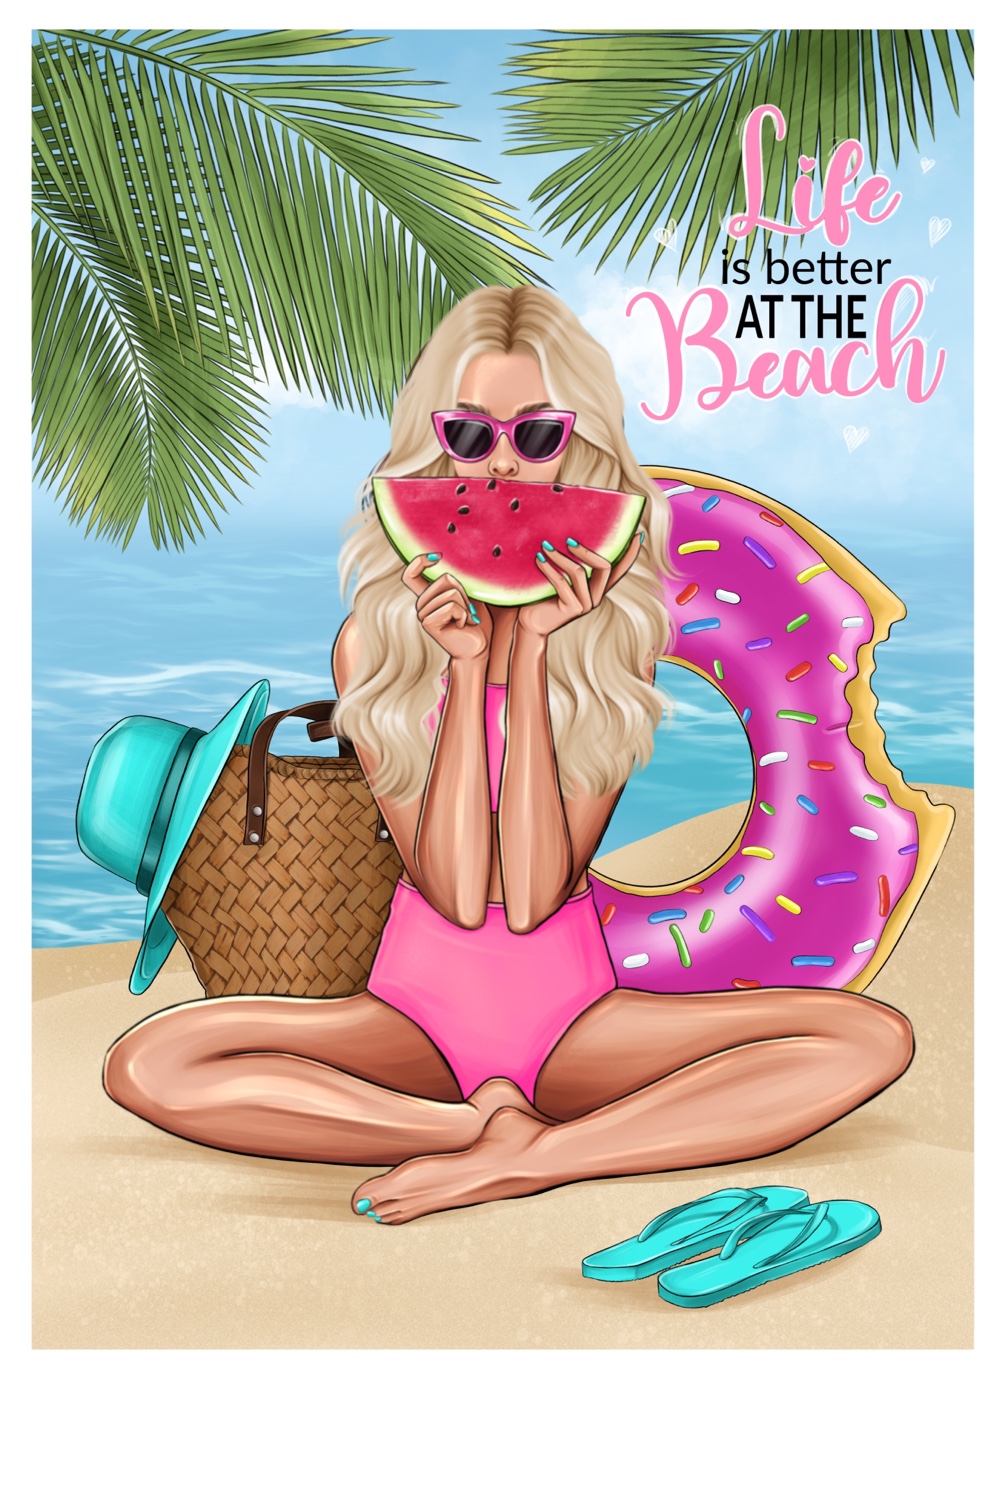 Girl On The Beach Travel Clipart Pinterest Image.